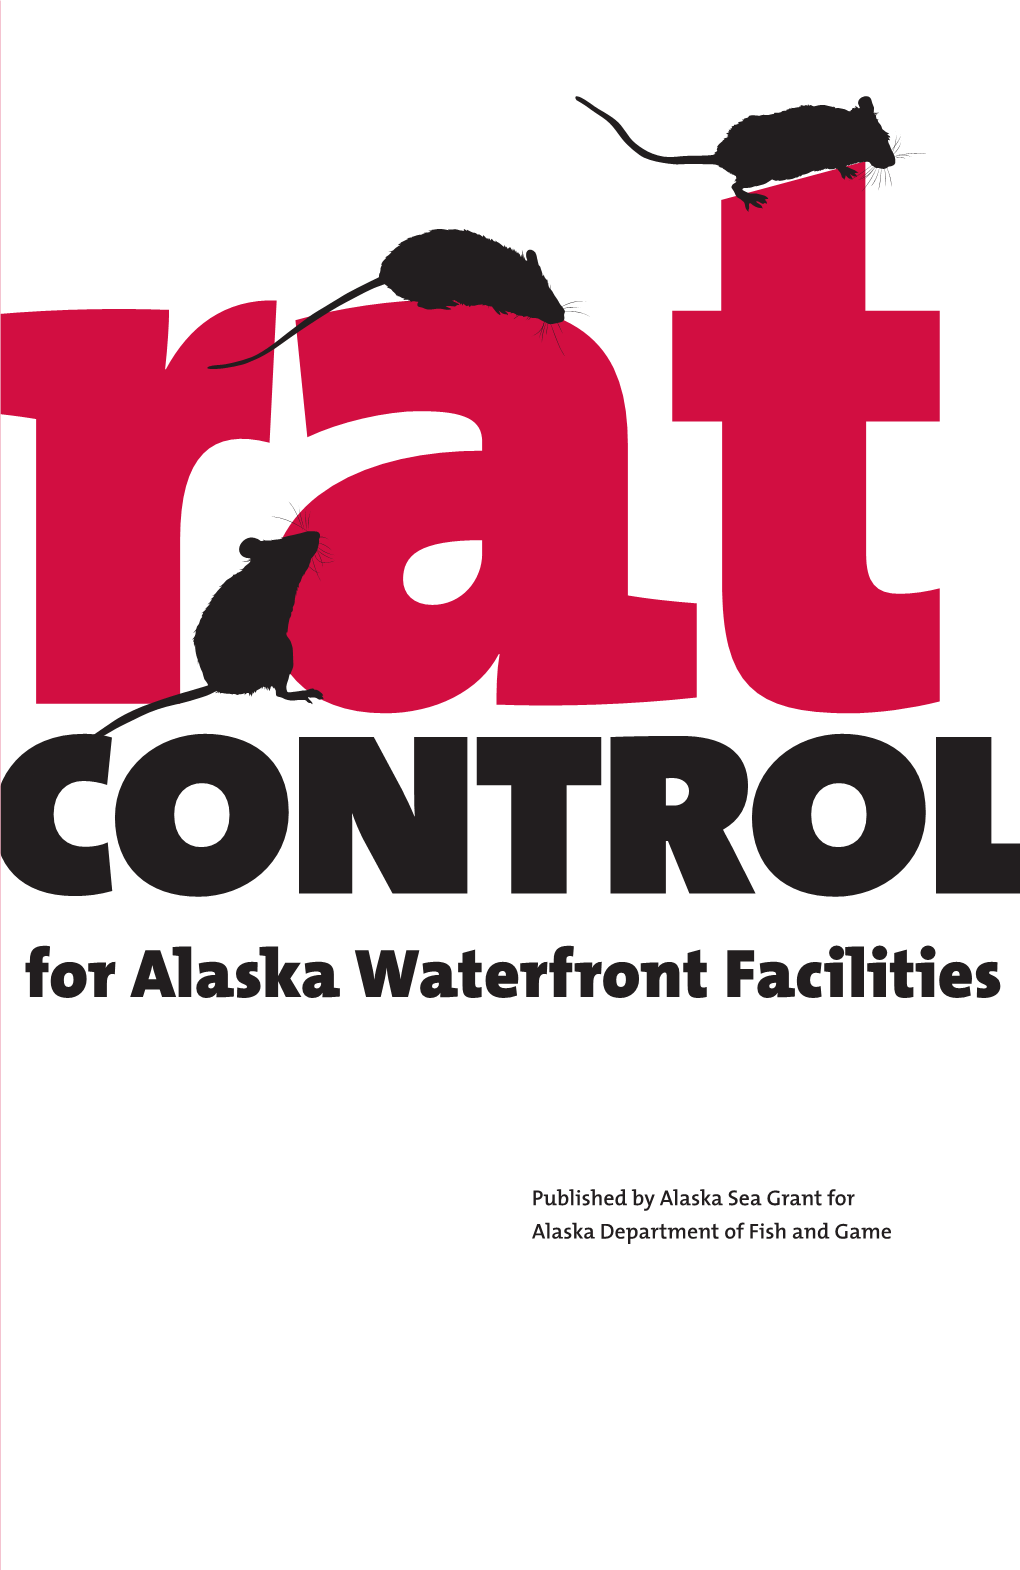 Rat Control for Alaska's Waterfront Facilities